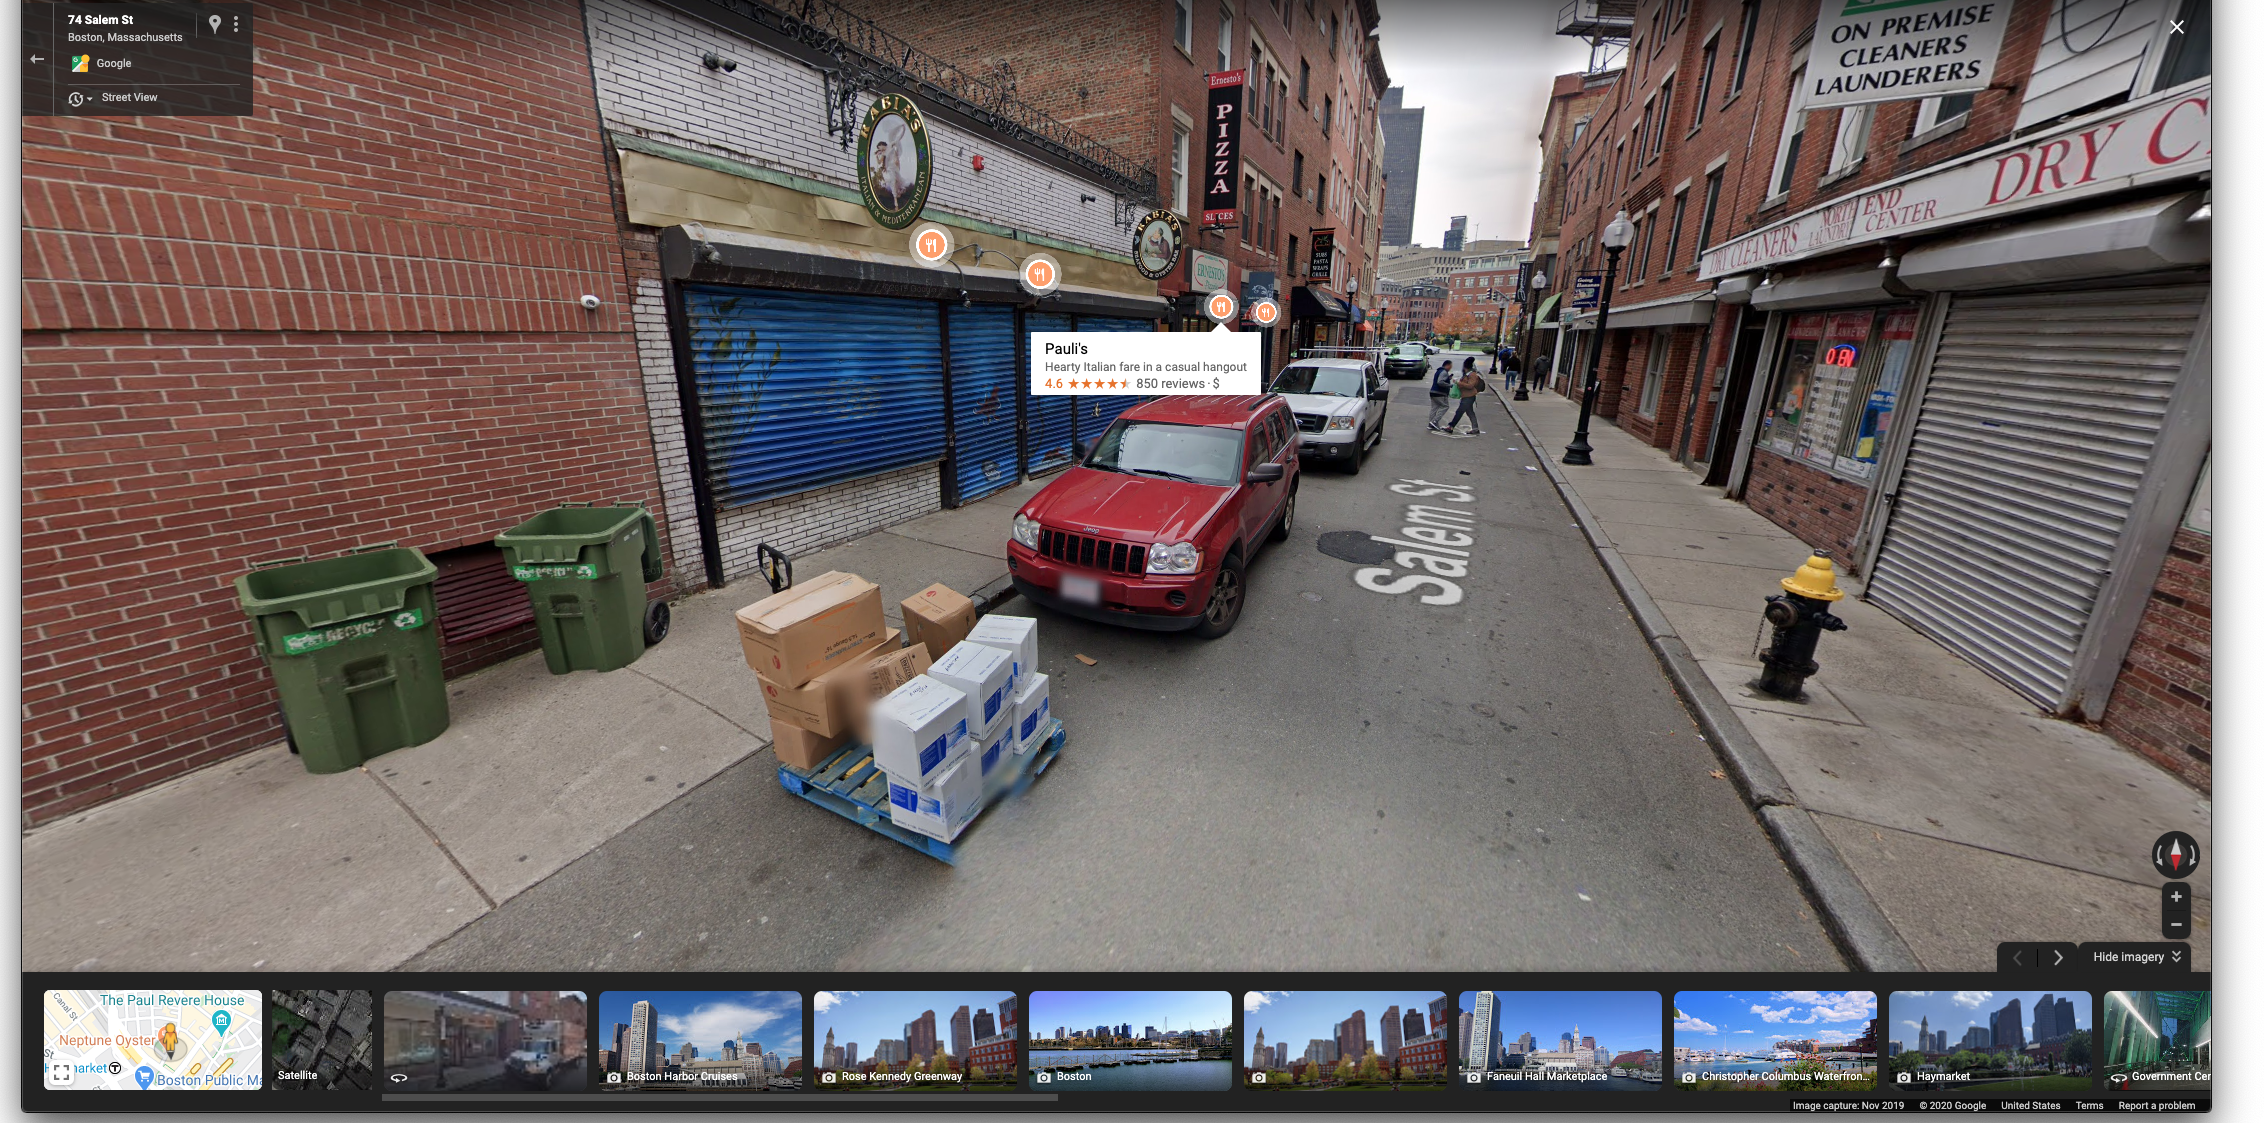 Google map street view